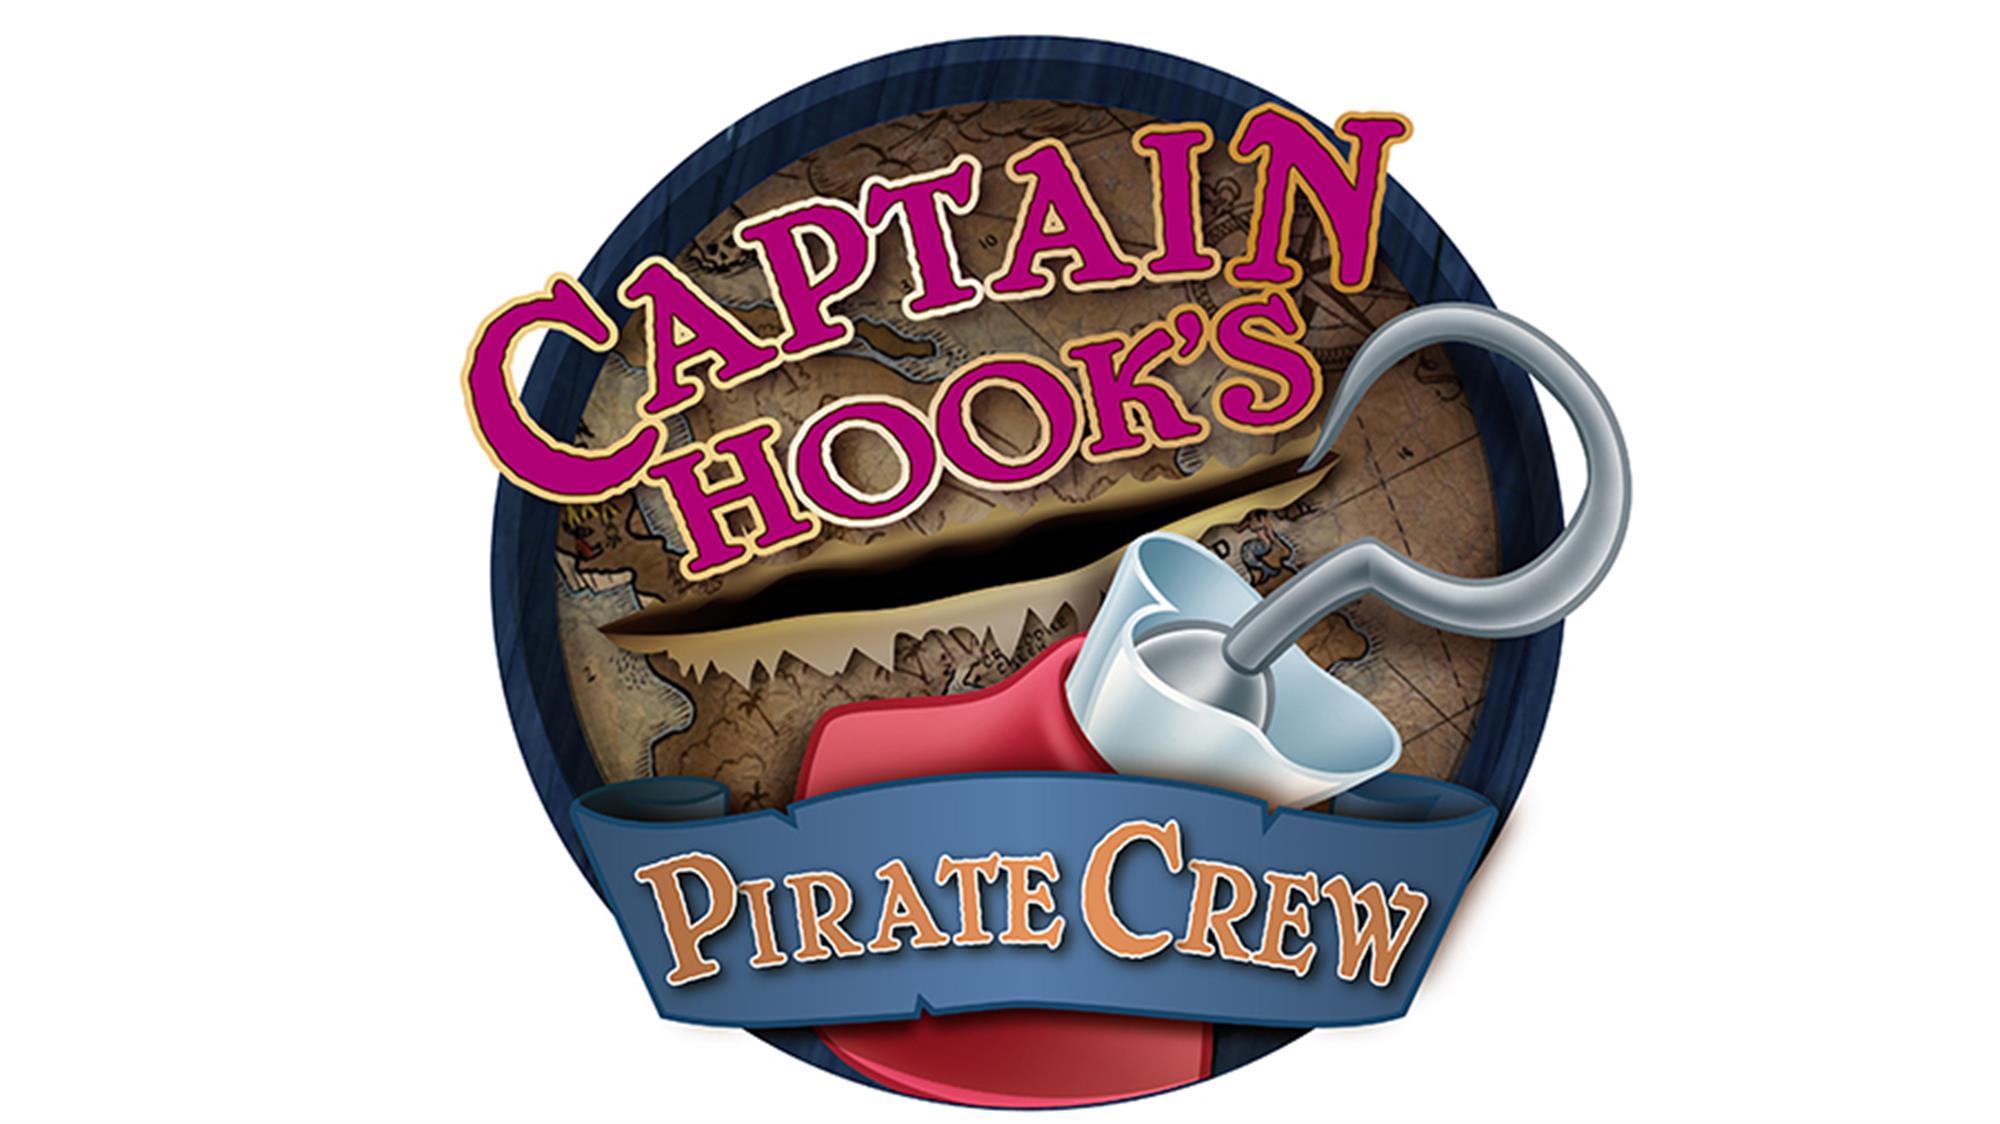 Captain Hook’s Pirate Crew